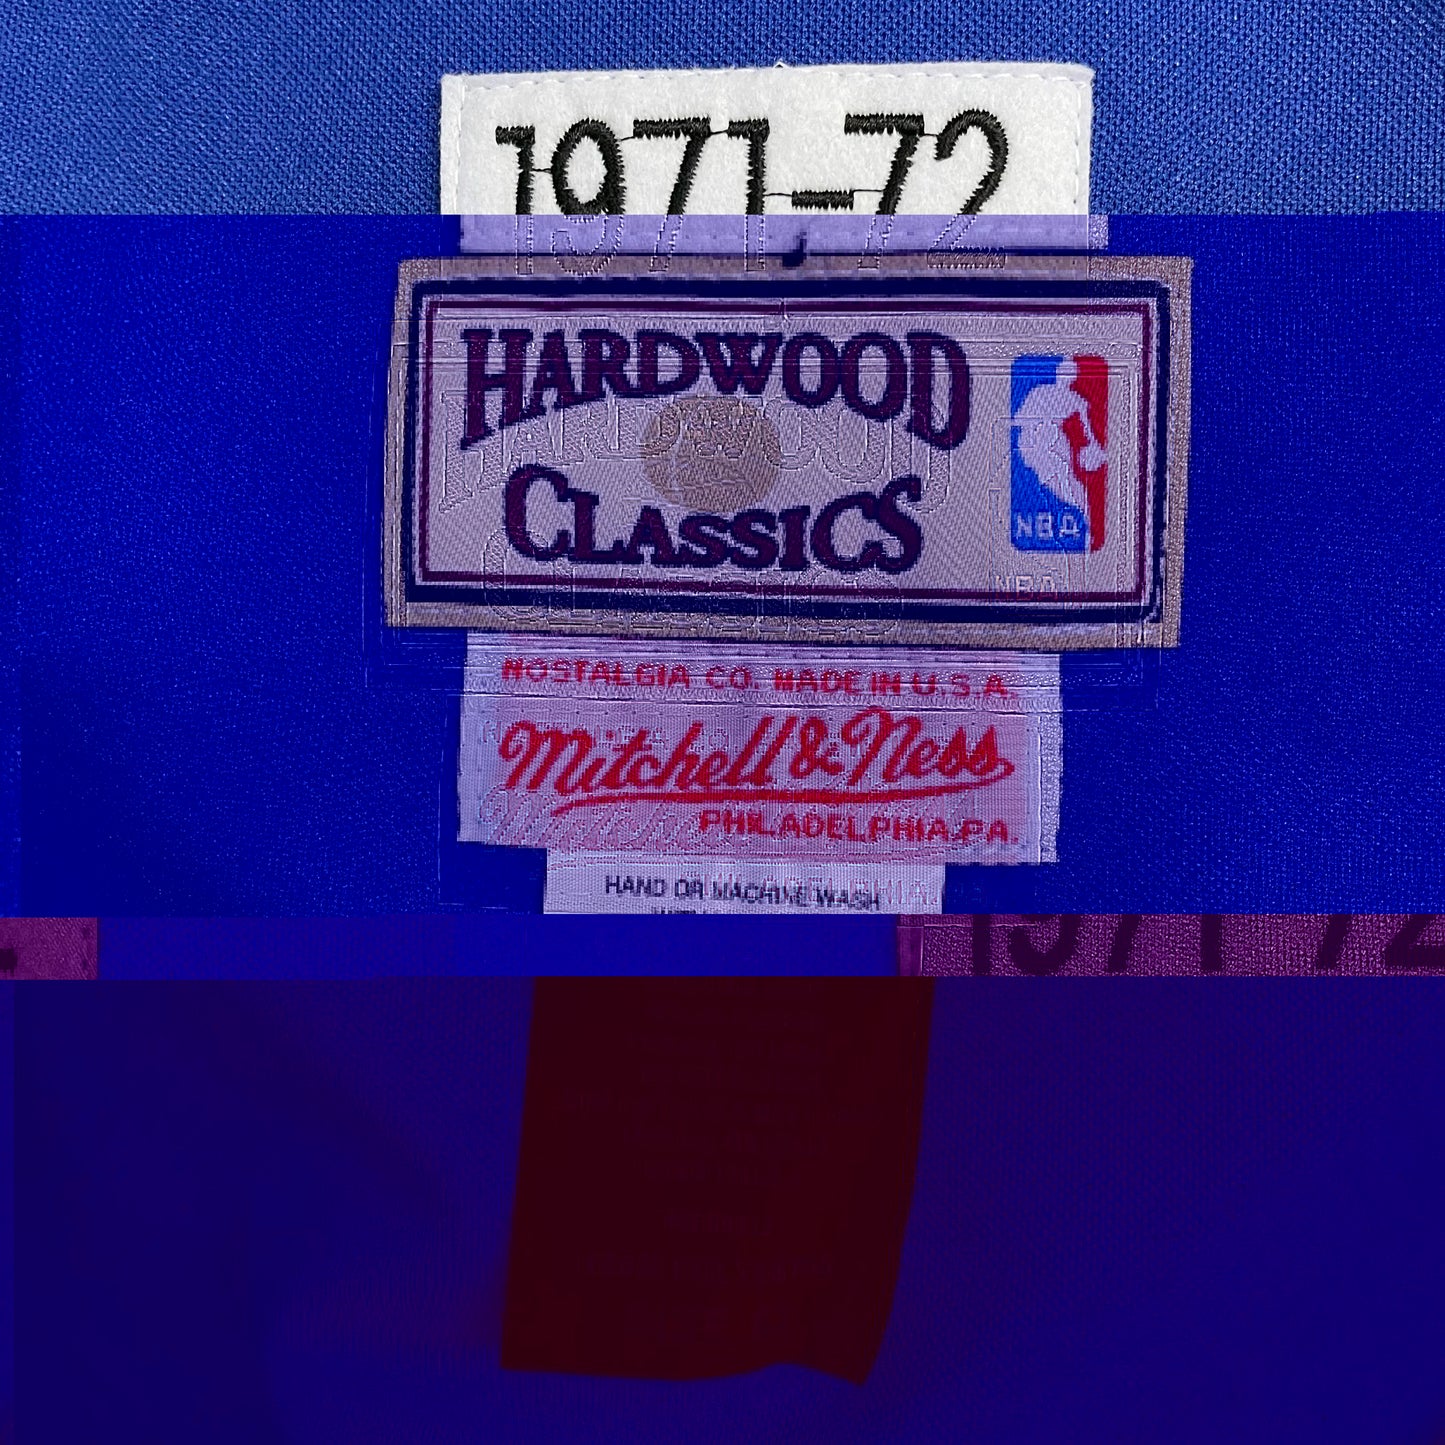 Hardwood Classics 1971-72 Atlanta "Pistol" #44 Blue